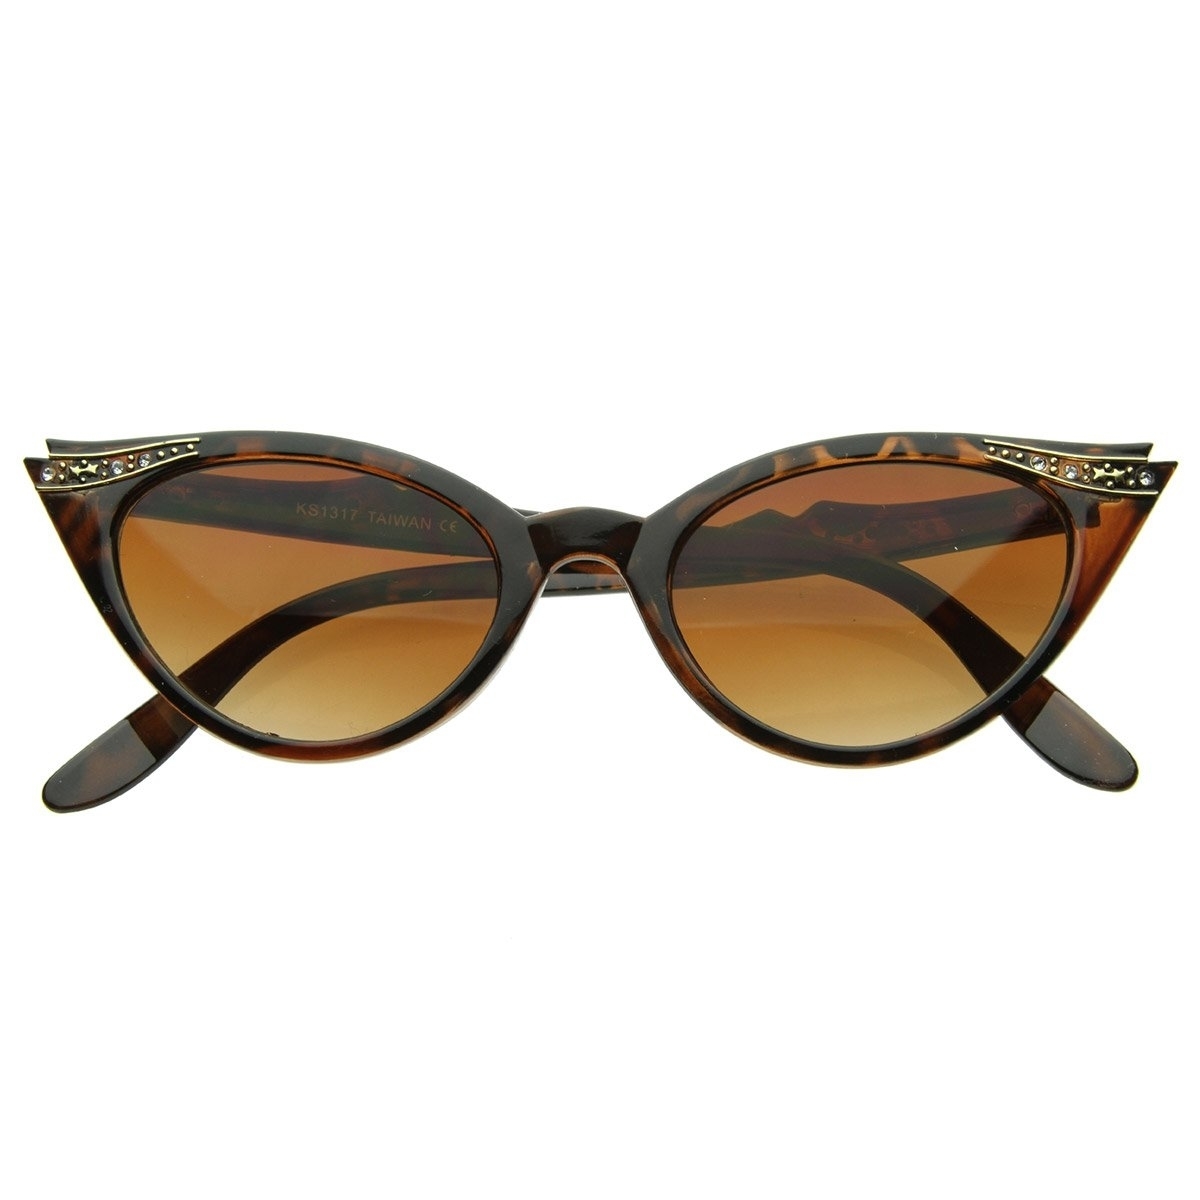 Vintage Inspired Mod Womens Fashion Rhinestone Cat Eye Sunglasses - Tortoise